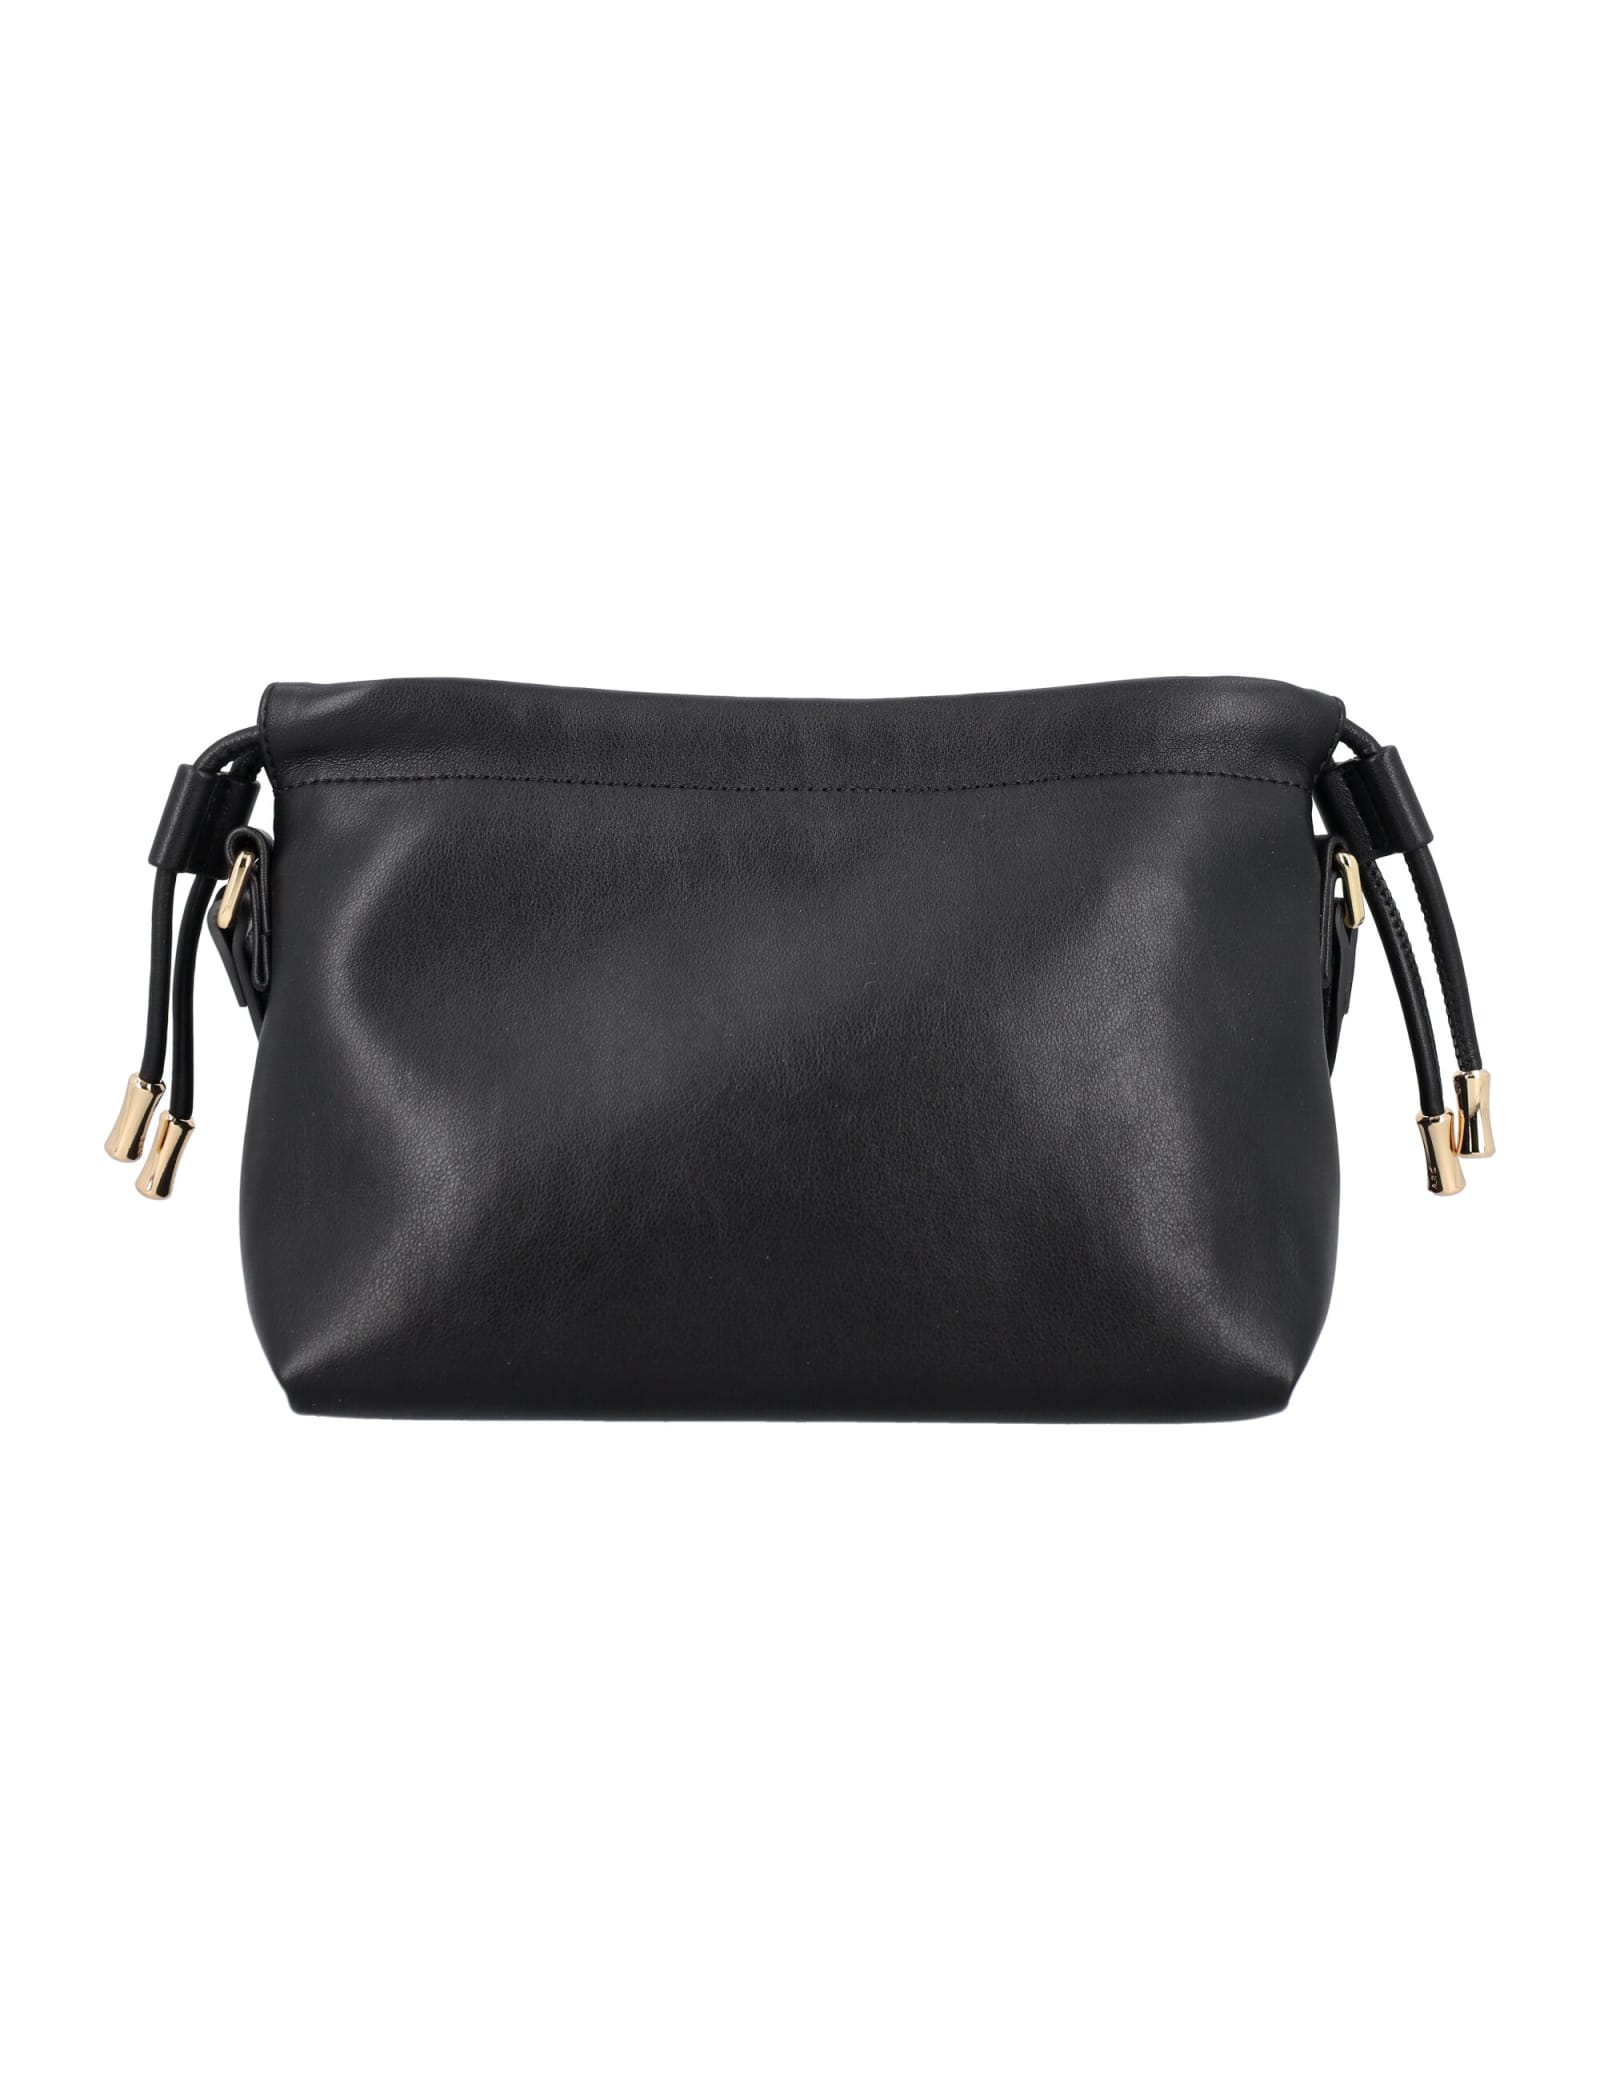 Shop Apc Ninon Mini Bag In Black